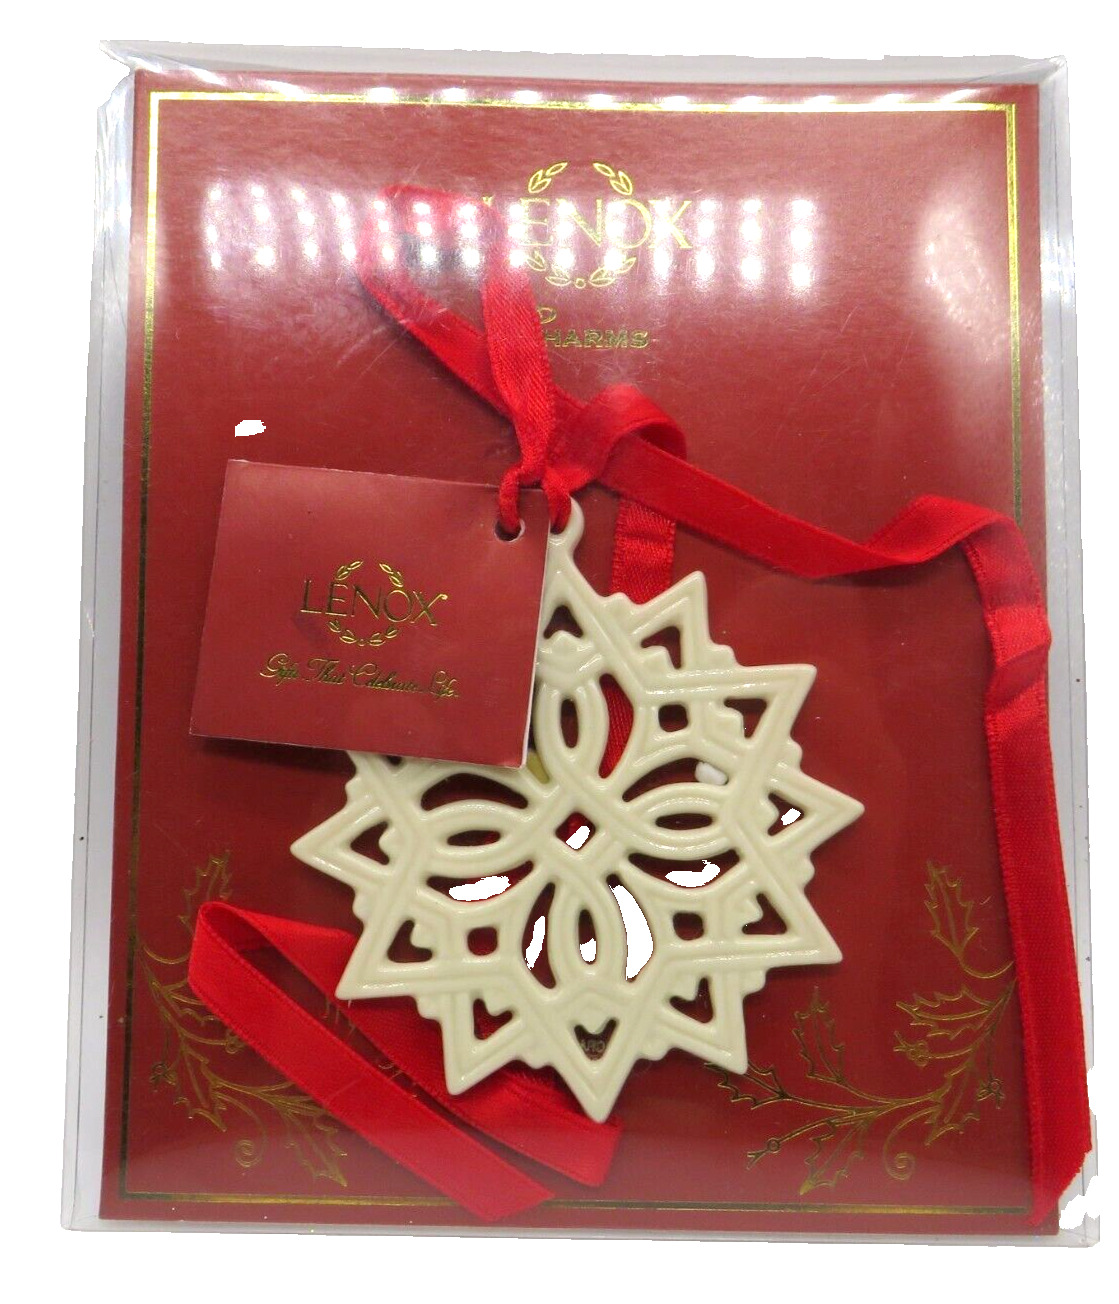 Lenox Snowflake Ornament Star Gift Charm Christmas Tree Red Satin Ribbon